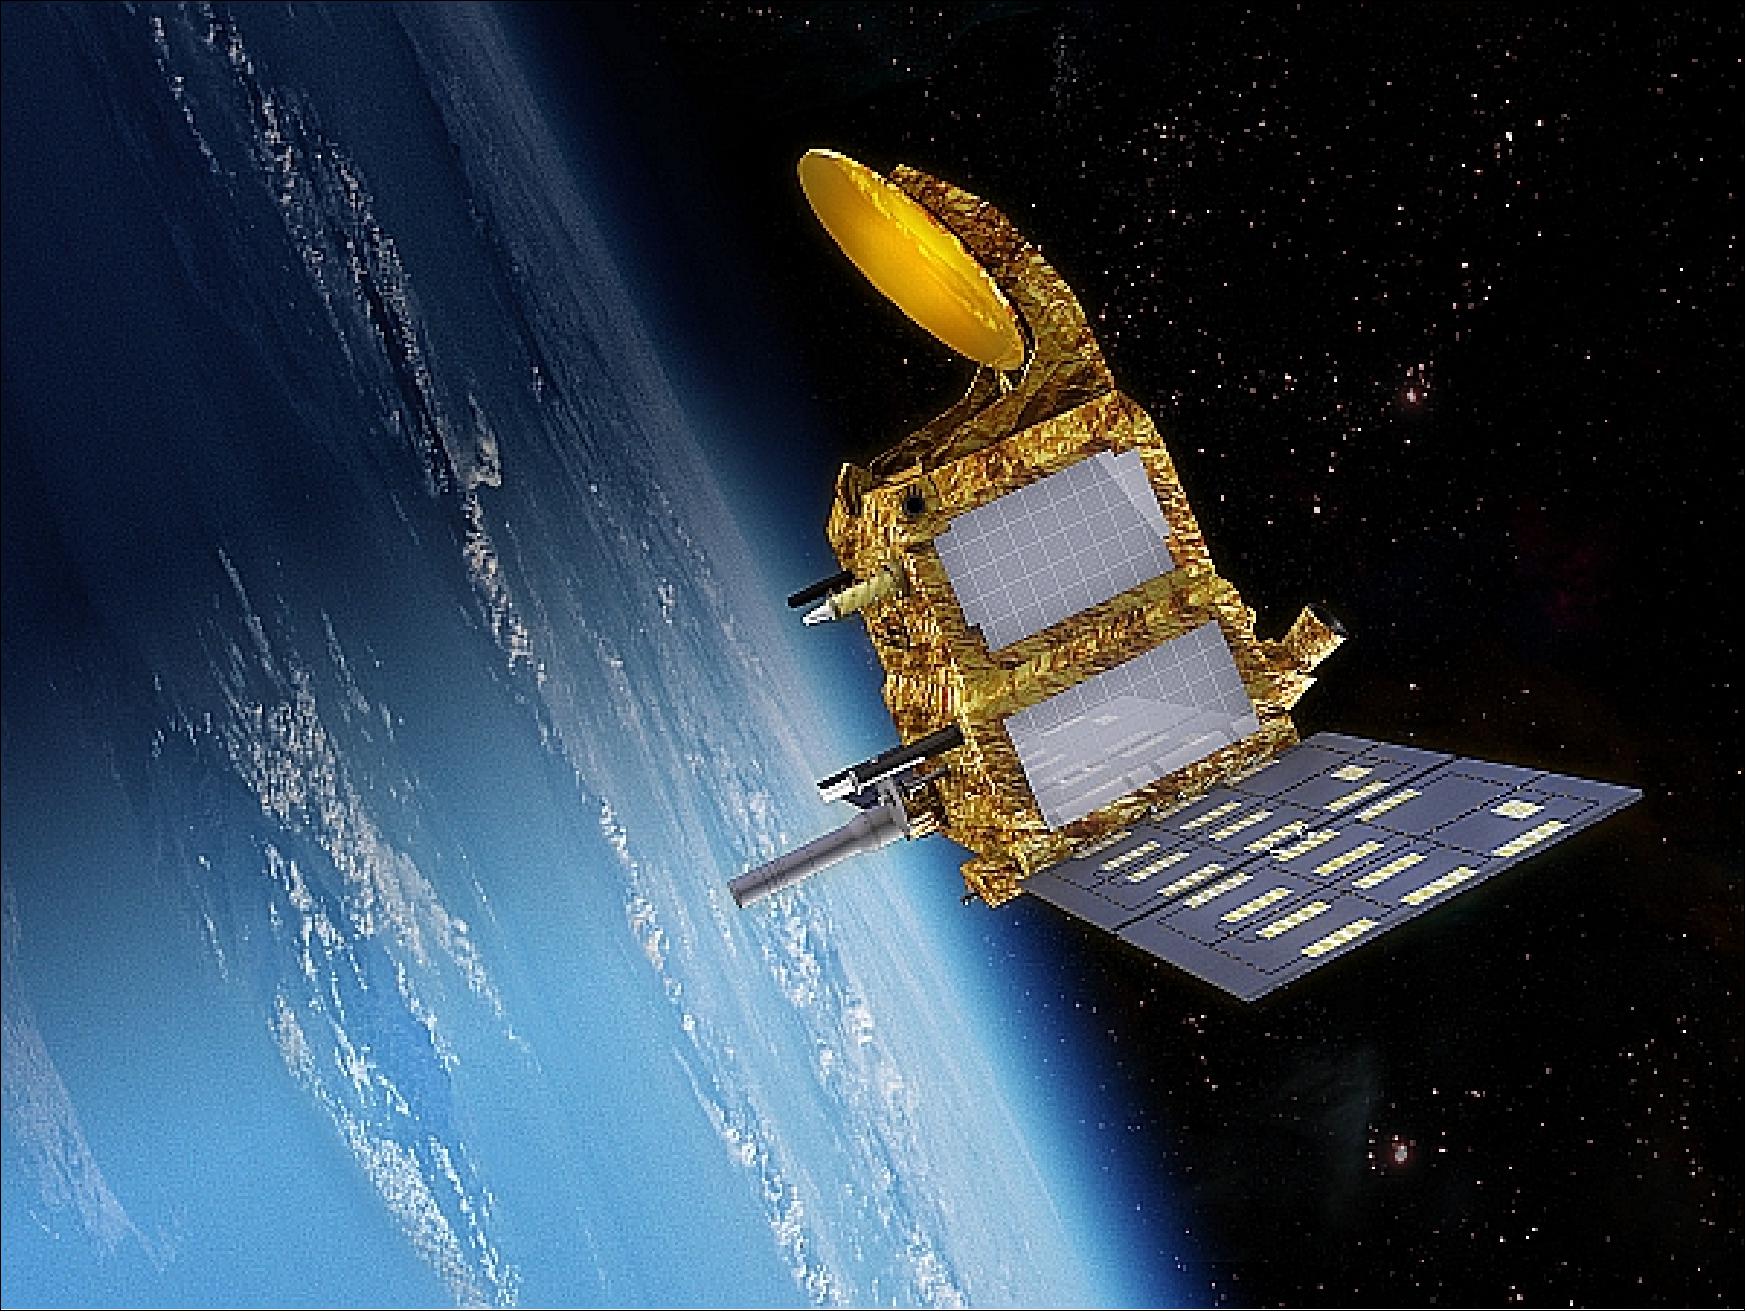 Figure 10: Artist's rendition of the SARAL spacecraft in orbit (image credit: CNES)